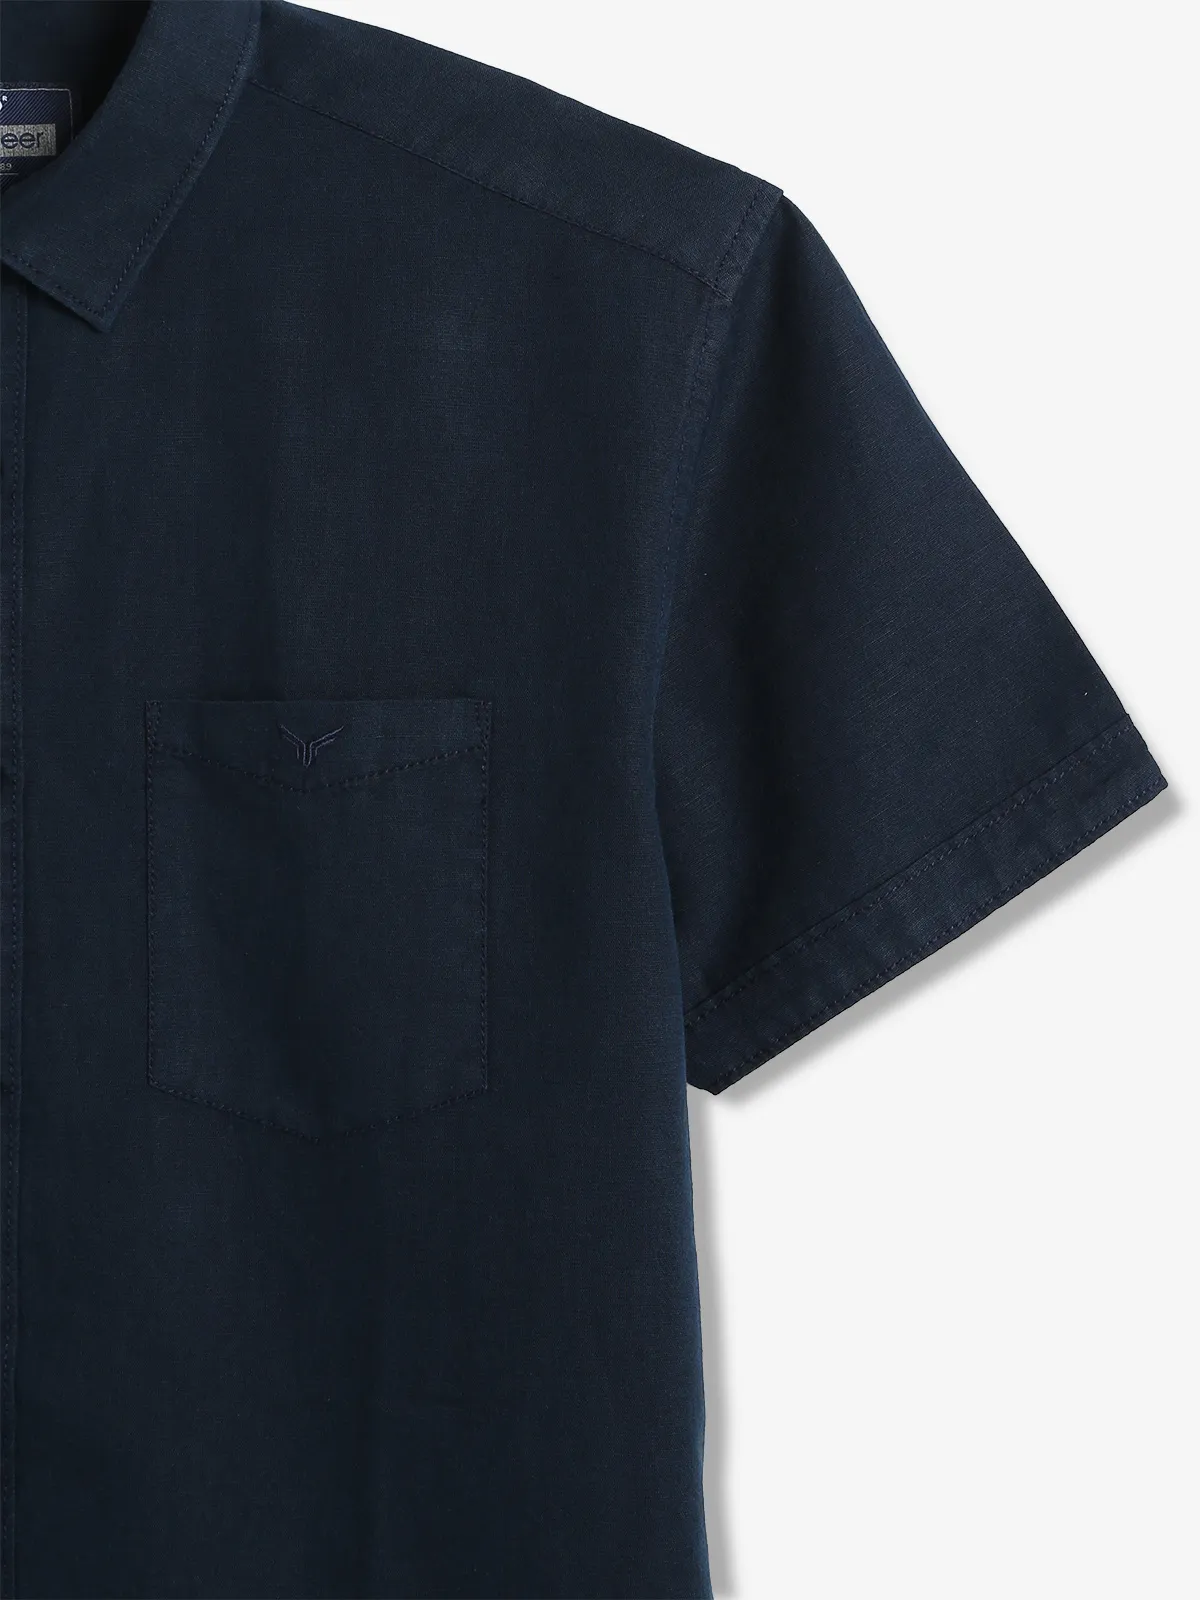 PIONEER navy cotton shirt